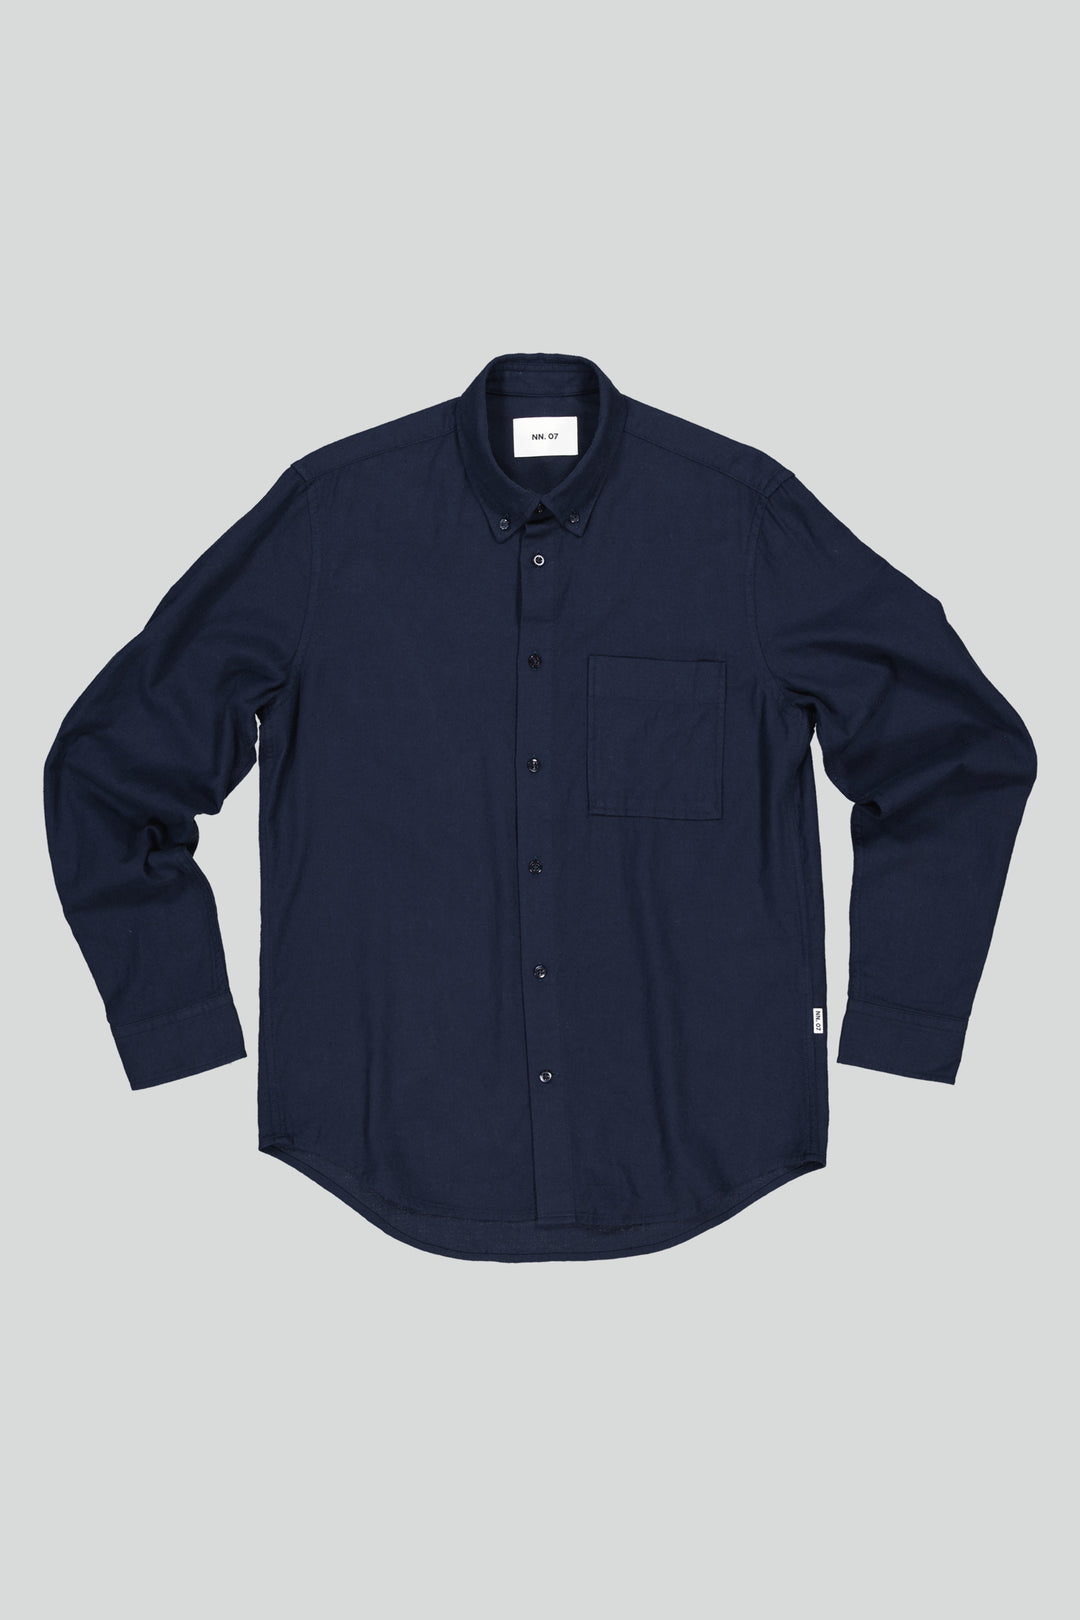 NN07 - Arne BD 5159 Shirt in Navy Blue | Buster McGee